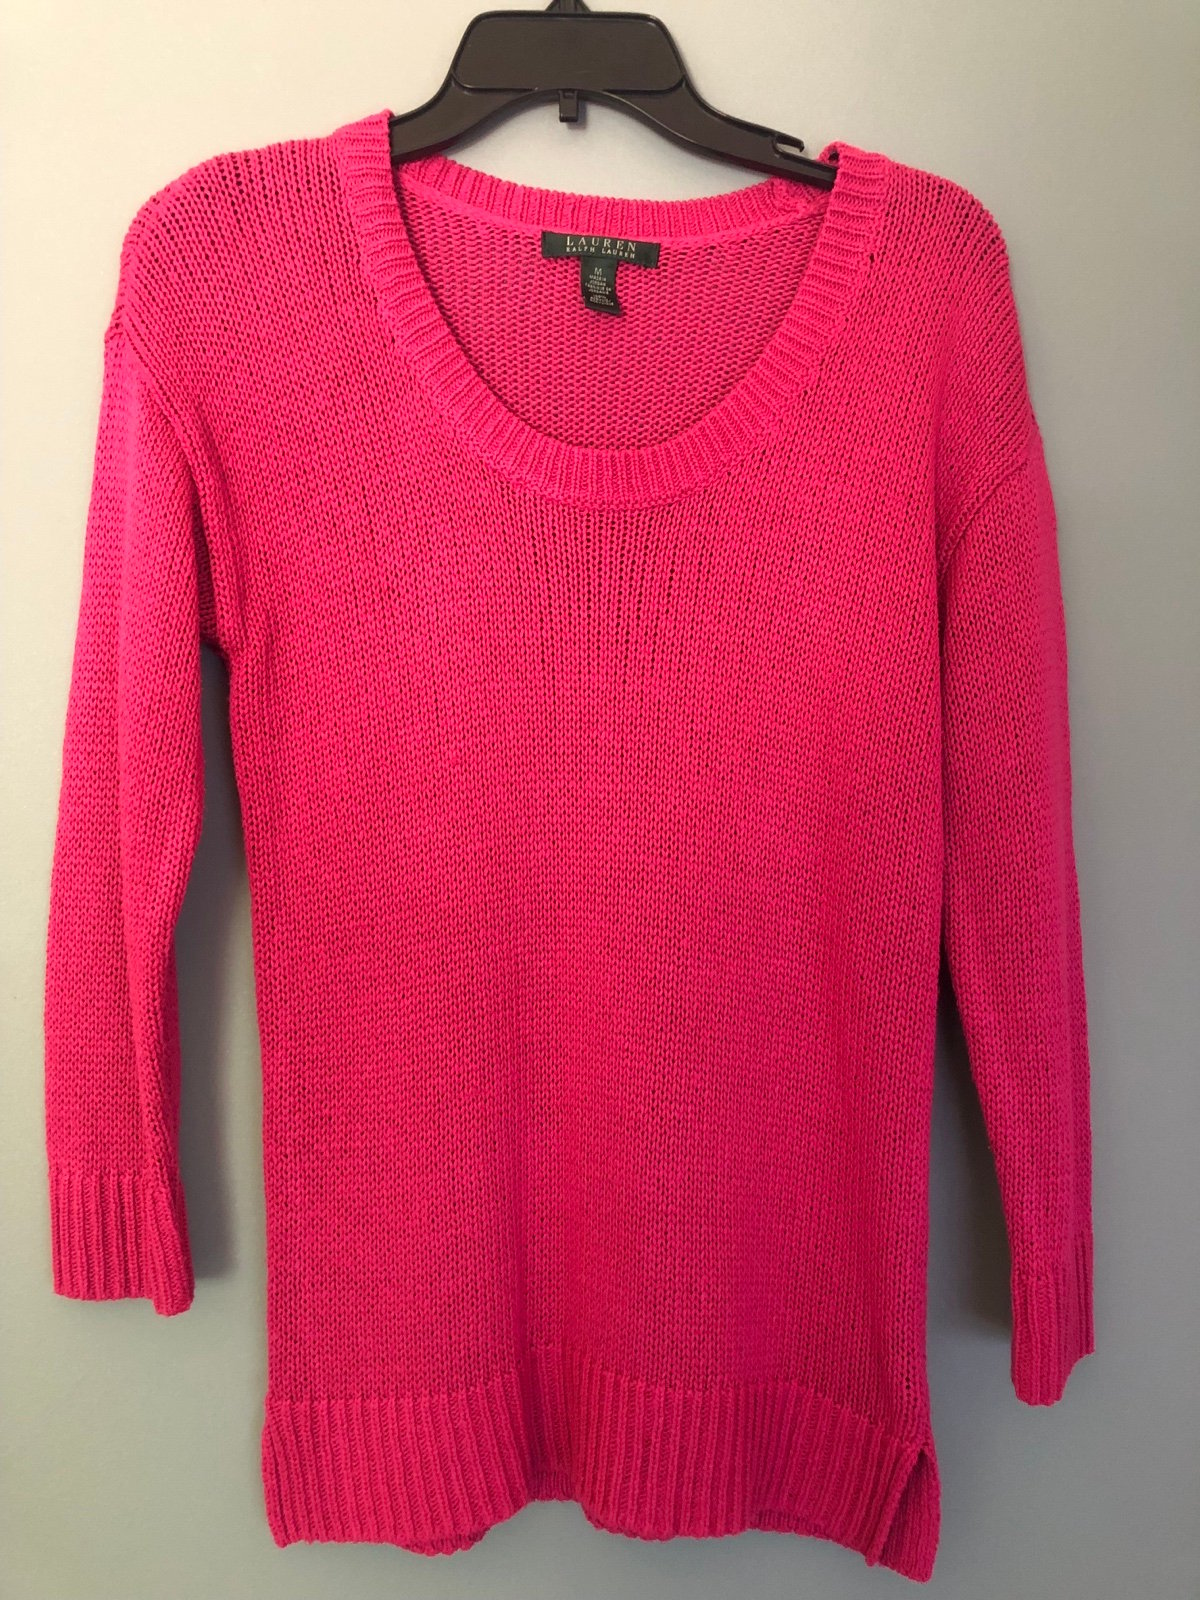 Fashion Lauren Ralph Lauren Size Medium Pink 3/4 Sleeve pullover Sweater pJfeu8OwU Factory Price